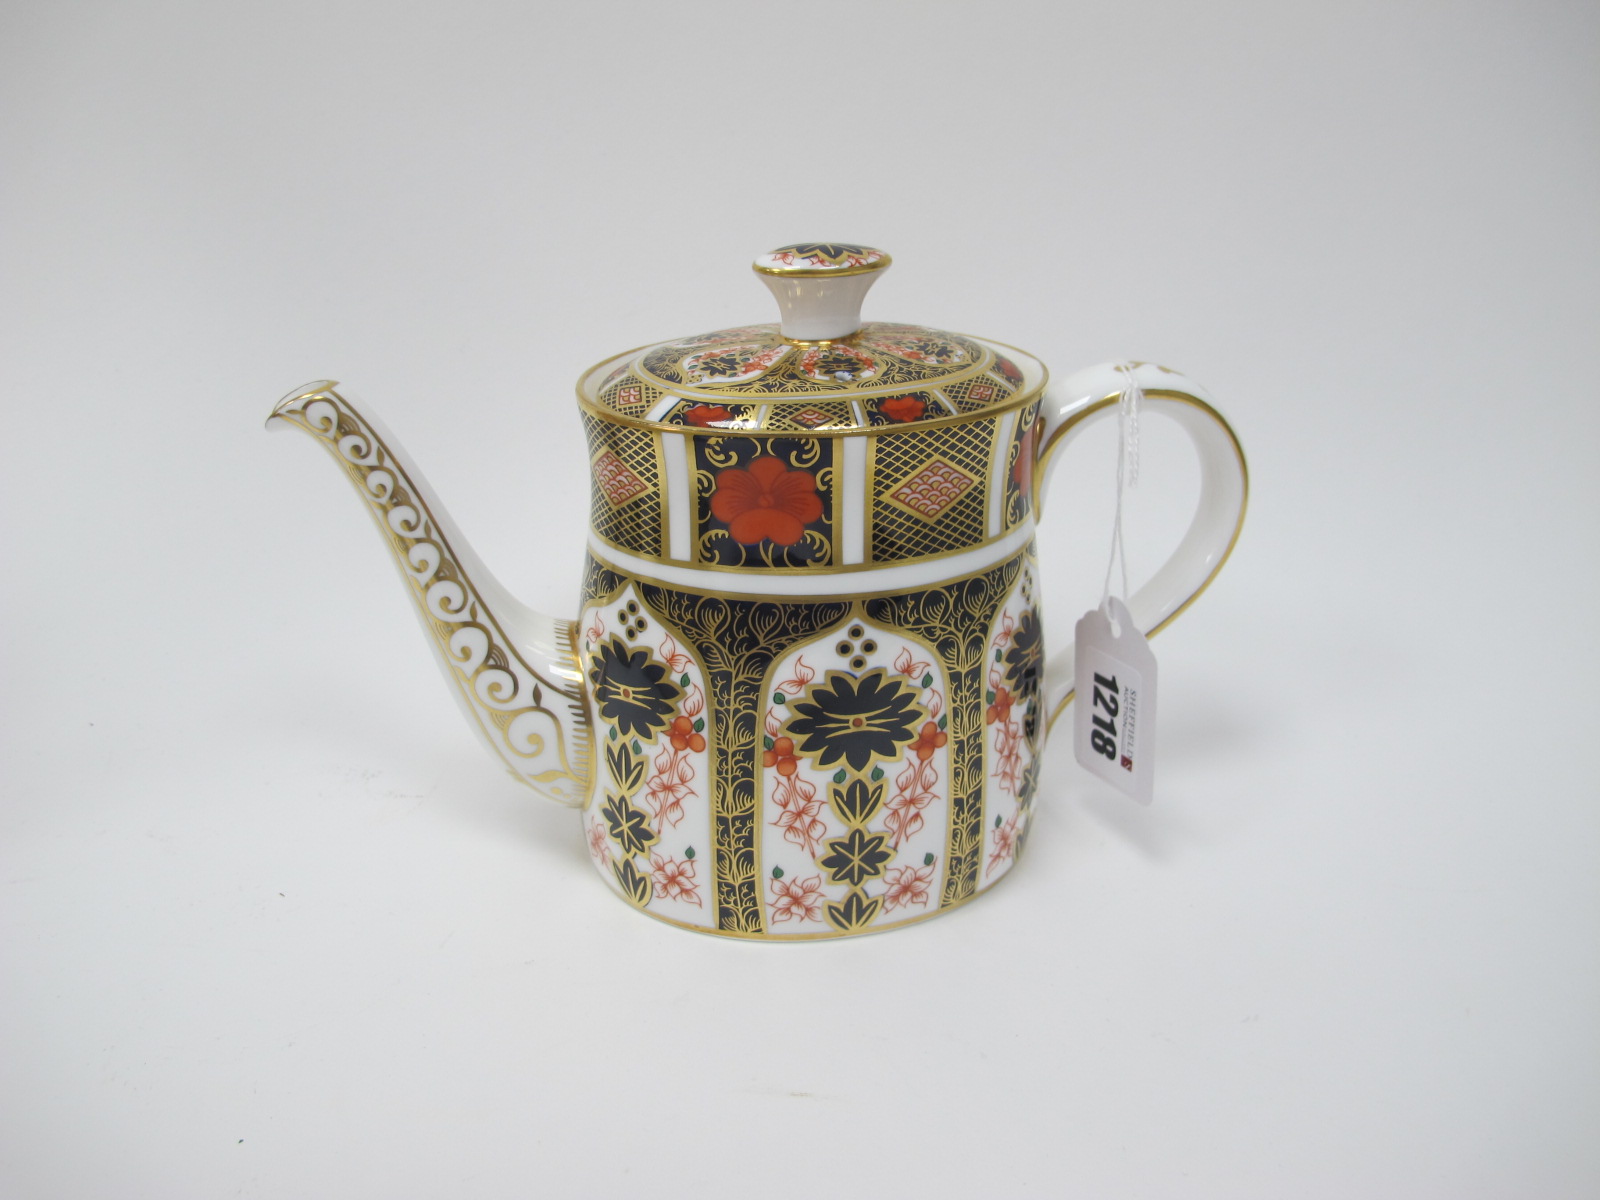 Royal Crown Derby 1128 Imari Teapot, first quality 14.5cm high.